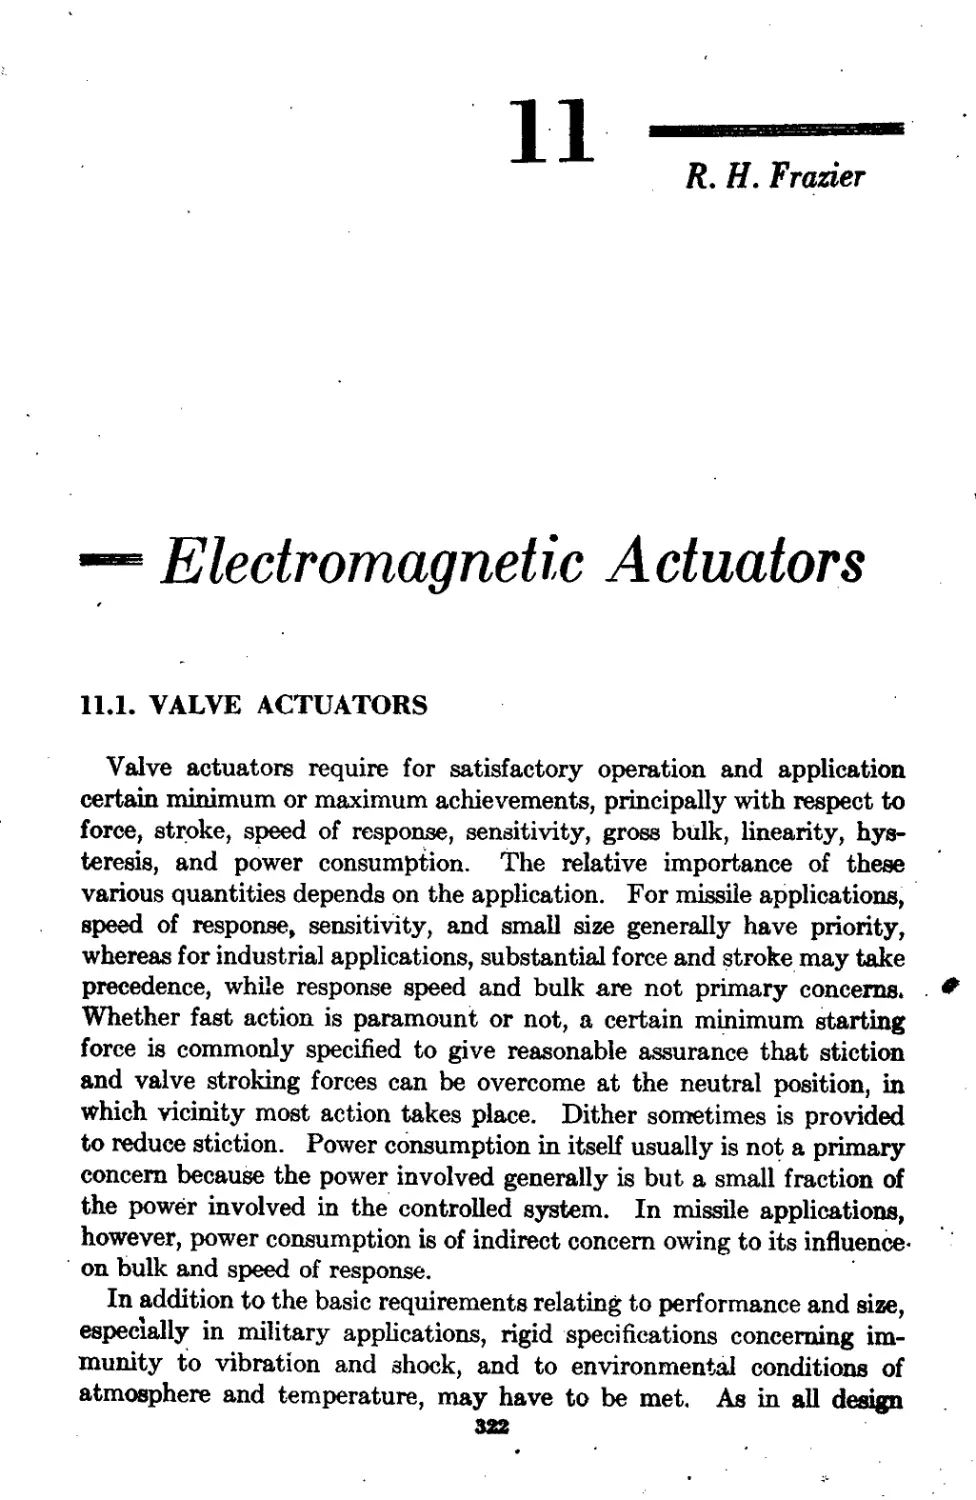 Chapter 11 Electromagnetic Actuators: R. H. Frazier